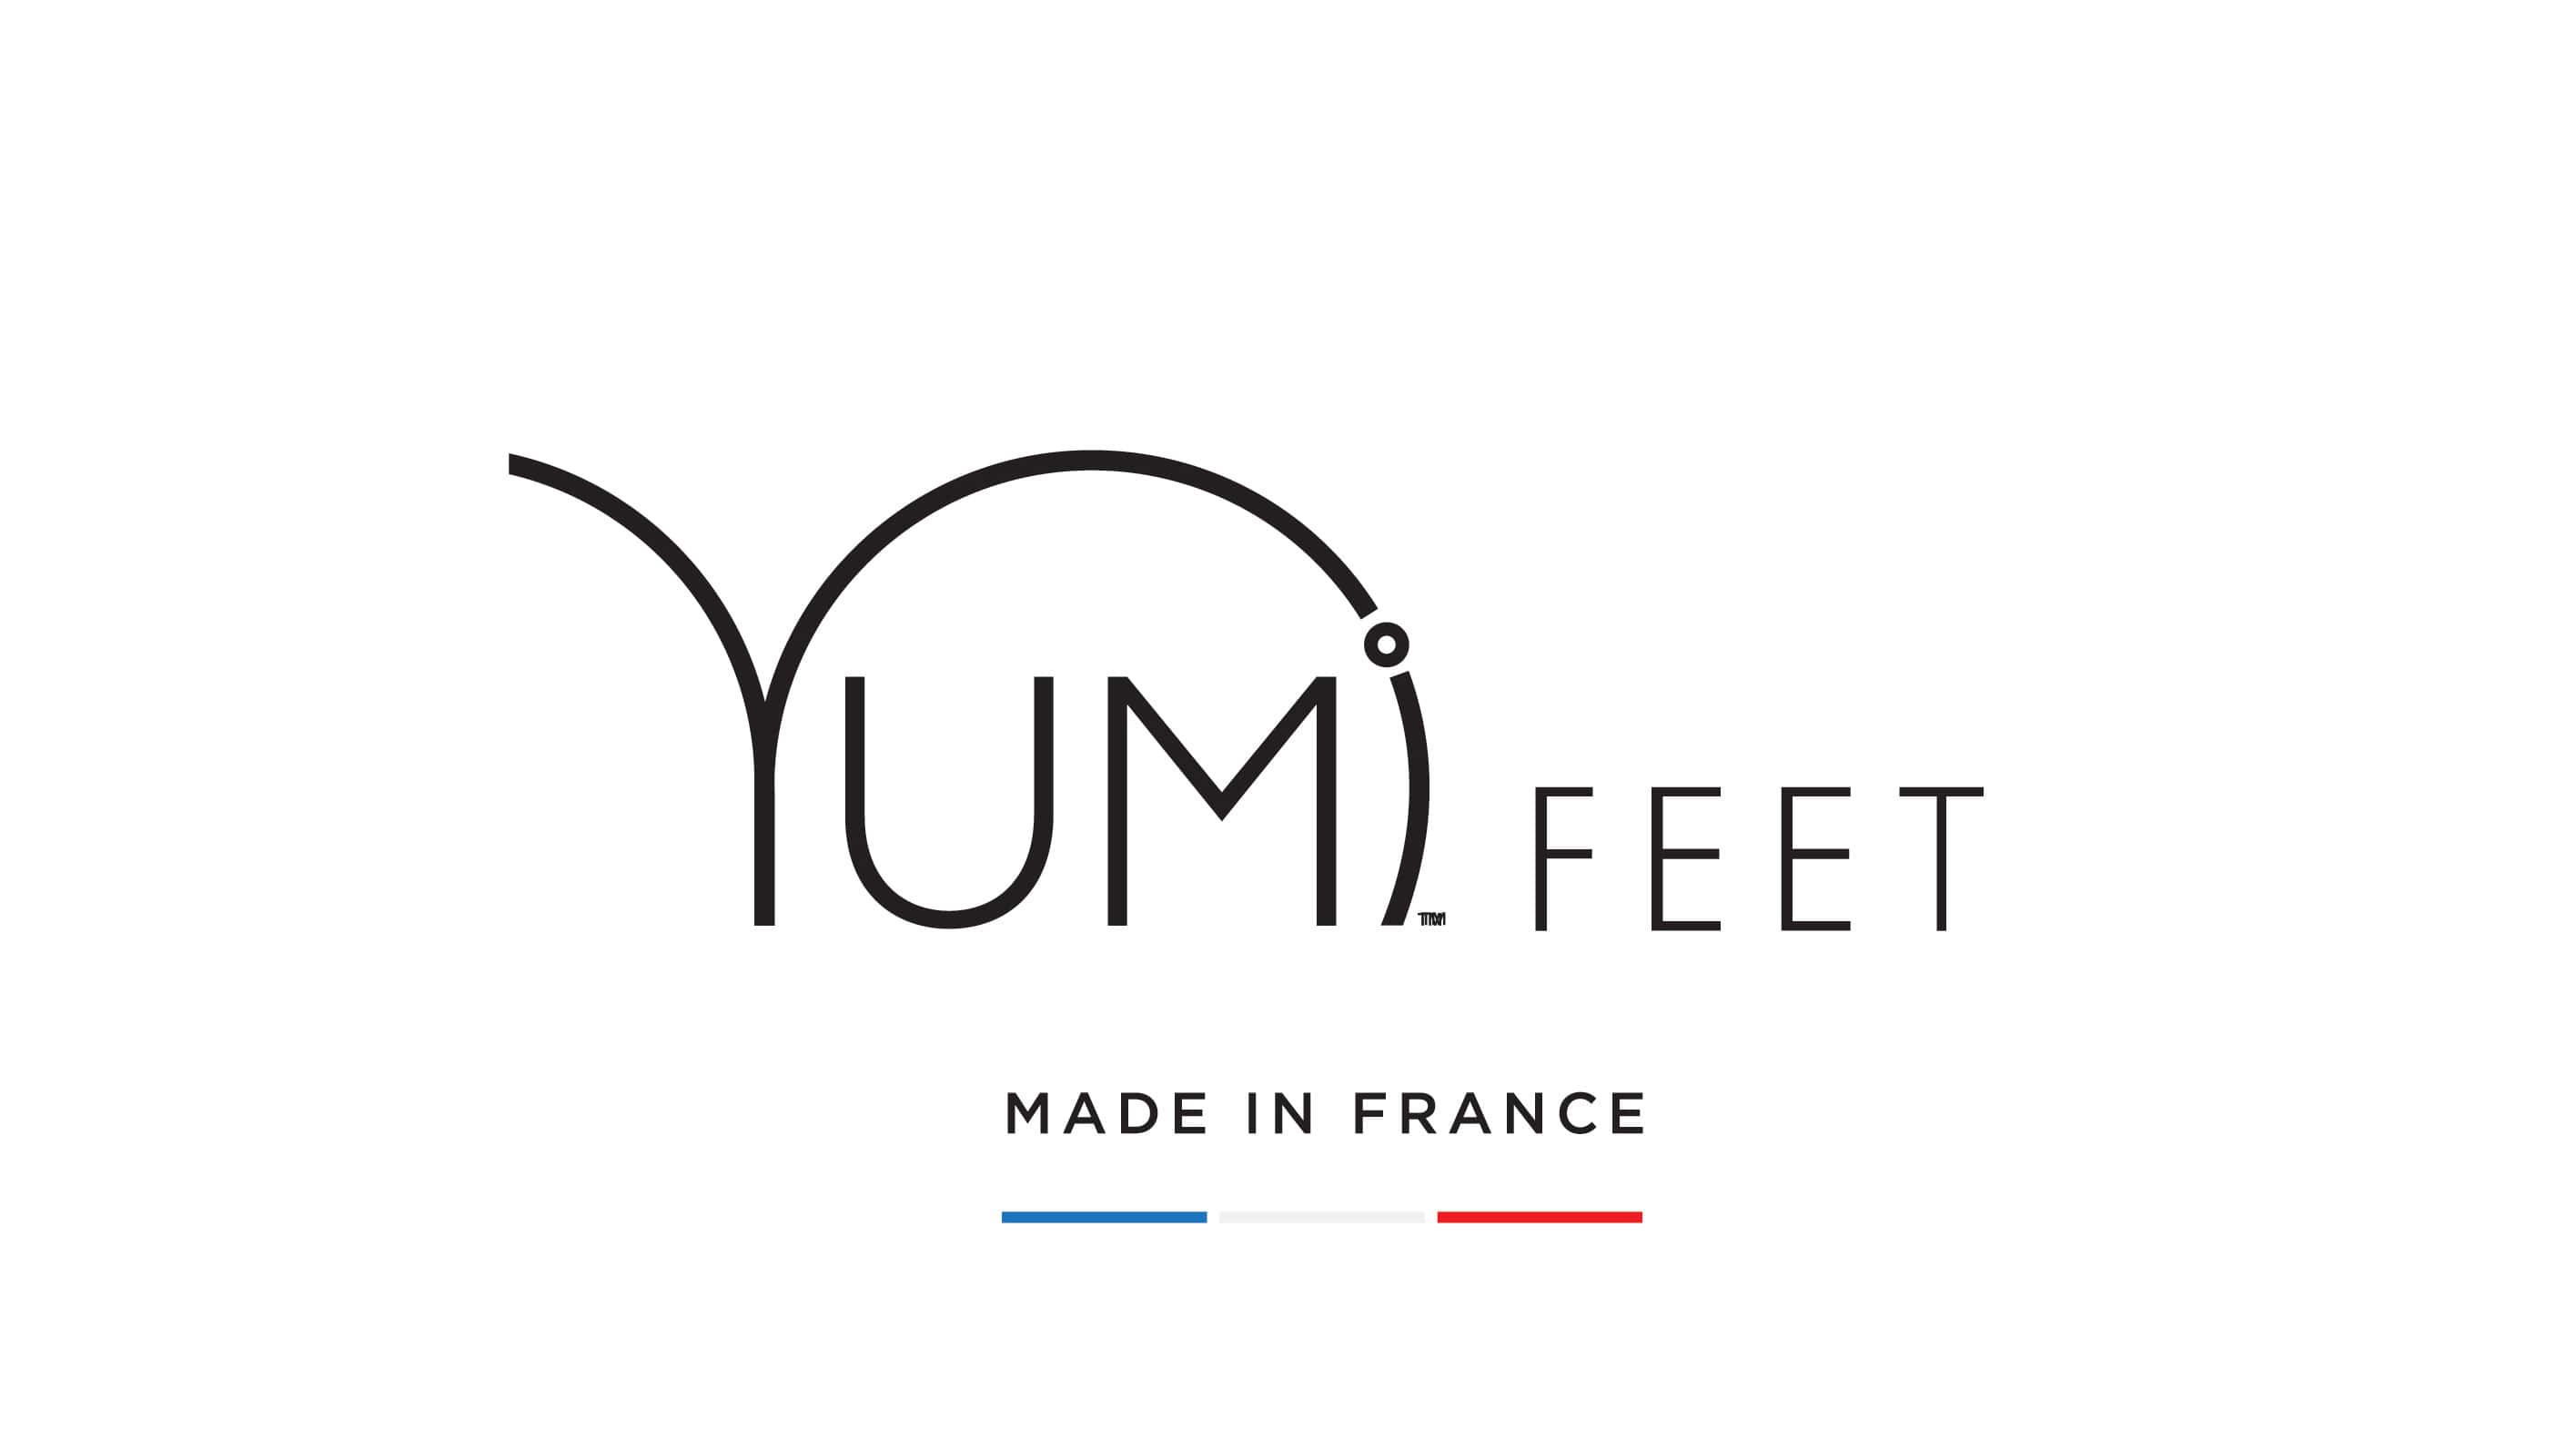 Yumi-Feet